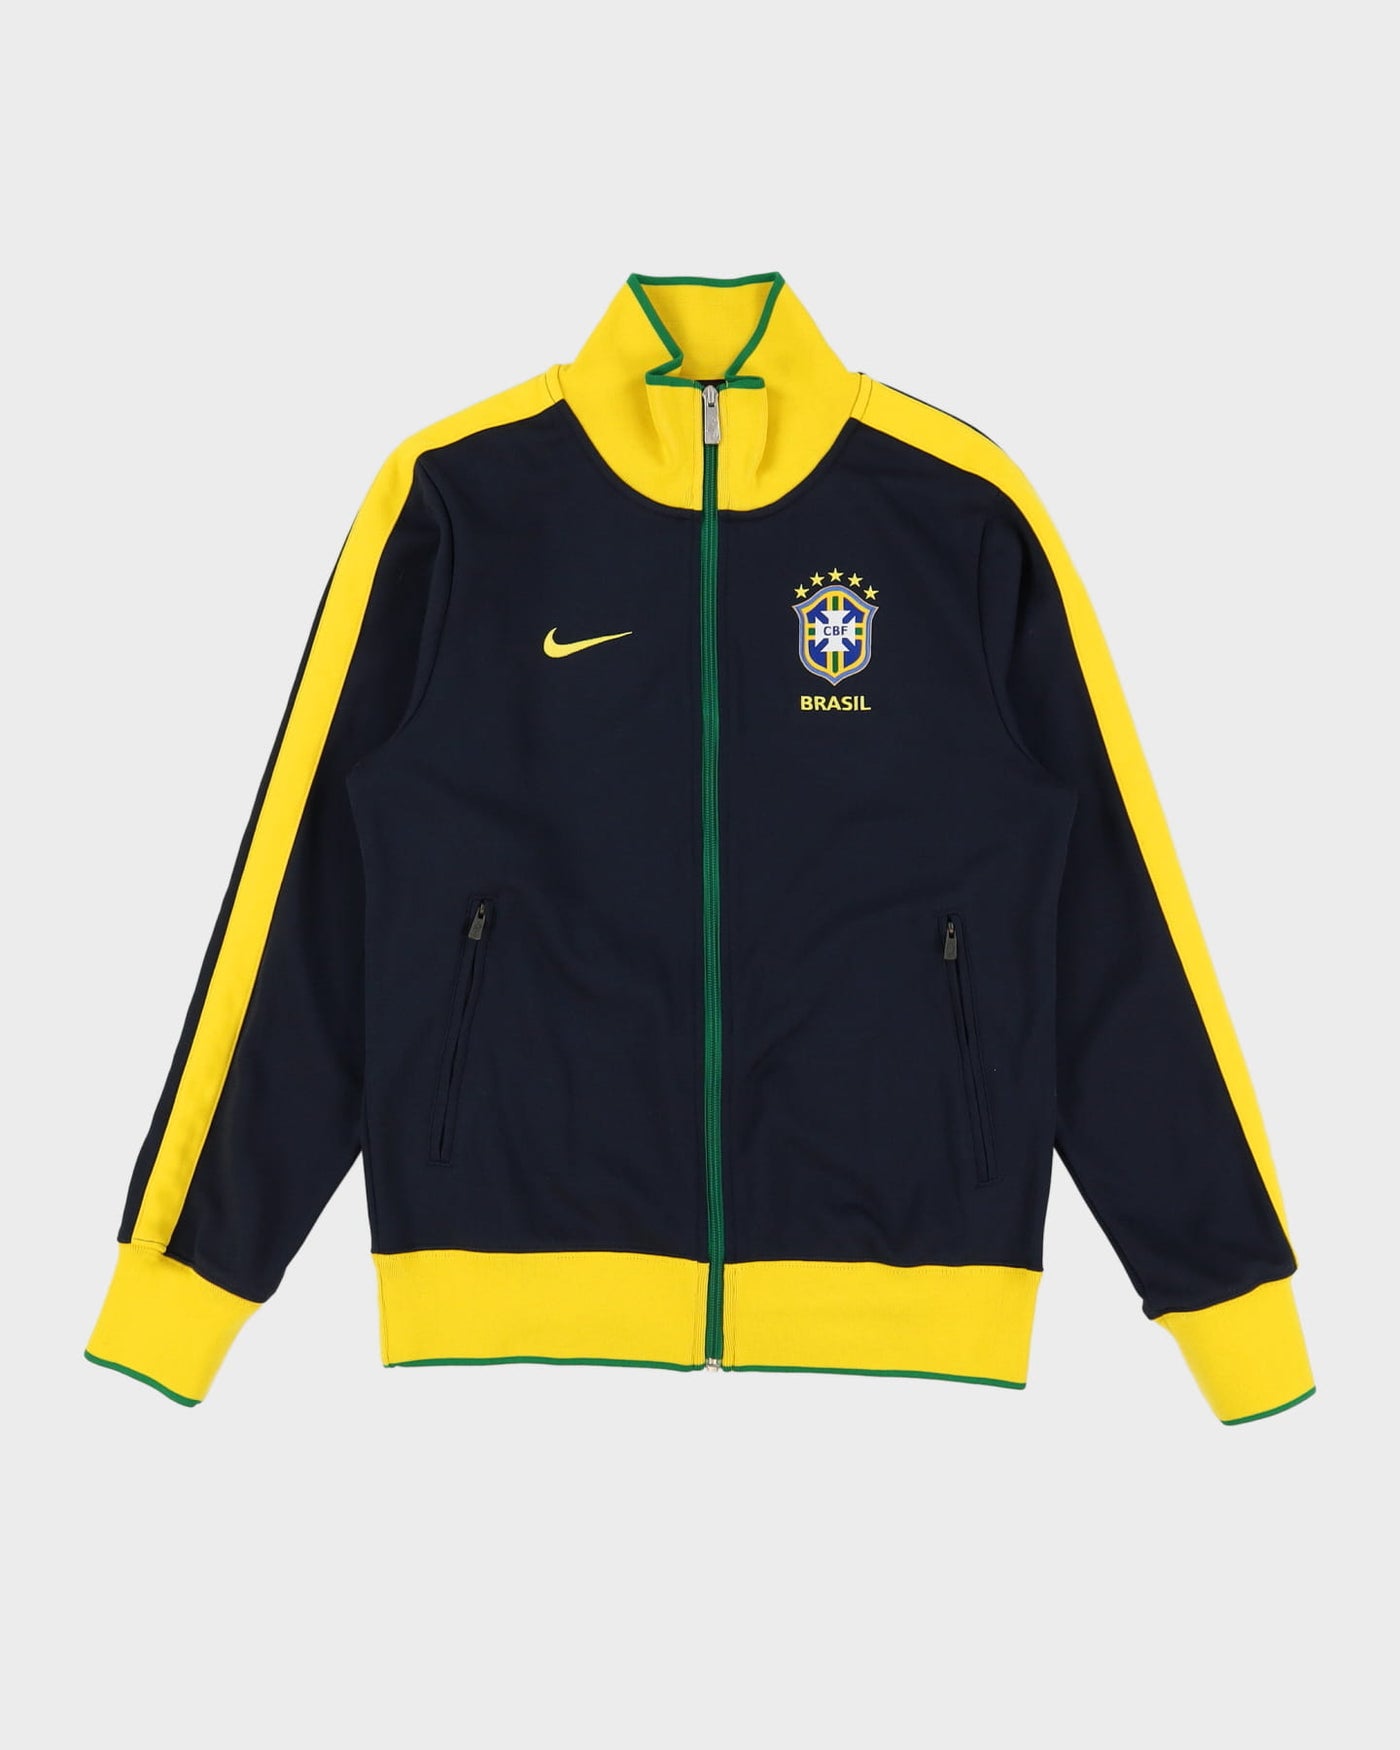 lager Enkelhed spids 00'erne Nike brazil marineblå / gul træningsjakke - s – Rokit